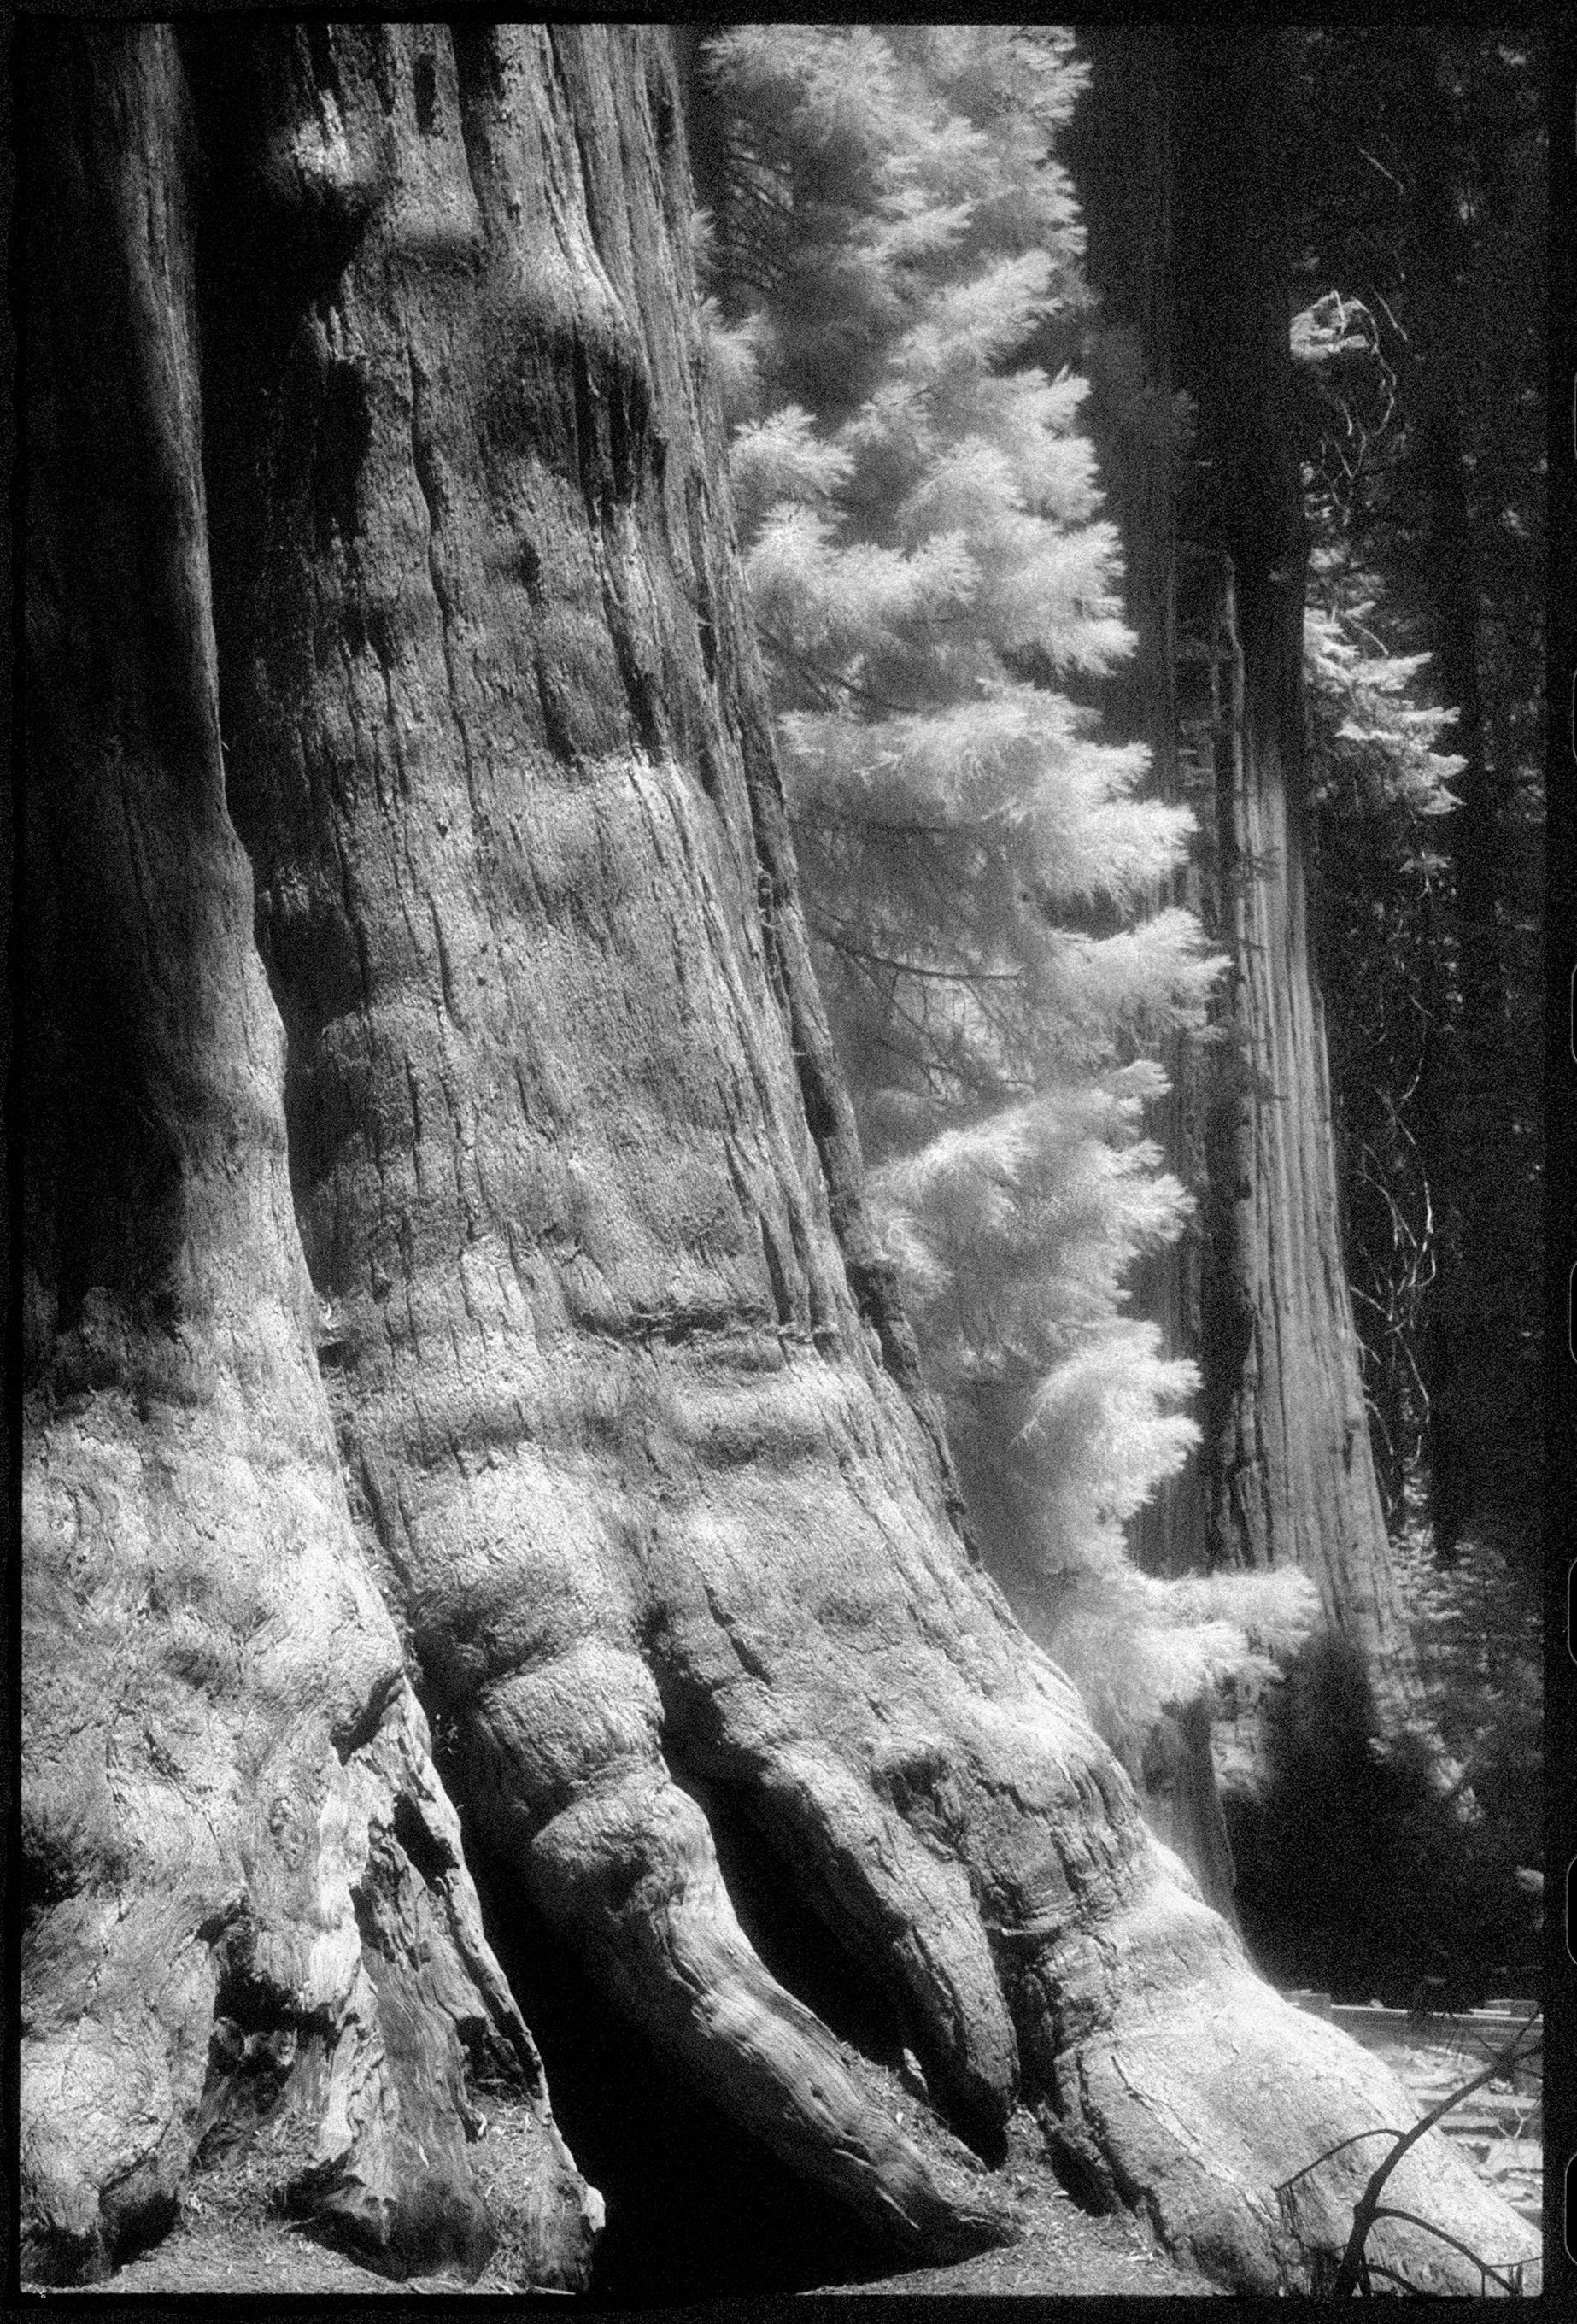 Edward Alfano Landscape Photograph - Sequoia National Forest - Majestic Black + White Photograph of Redwood Trees